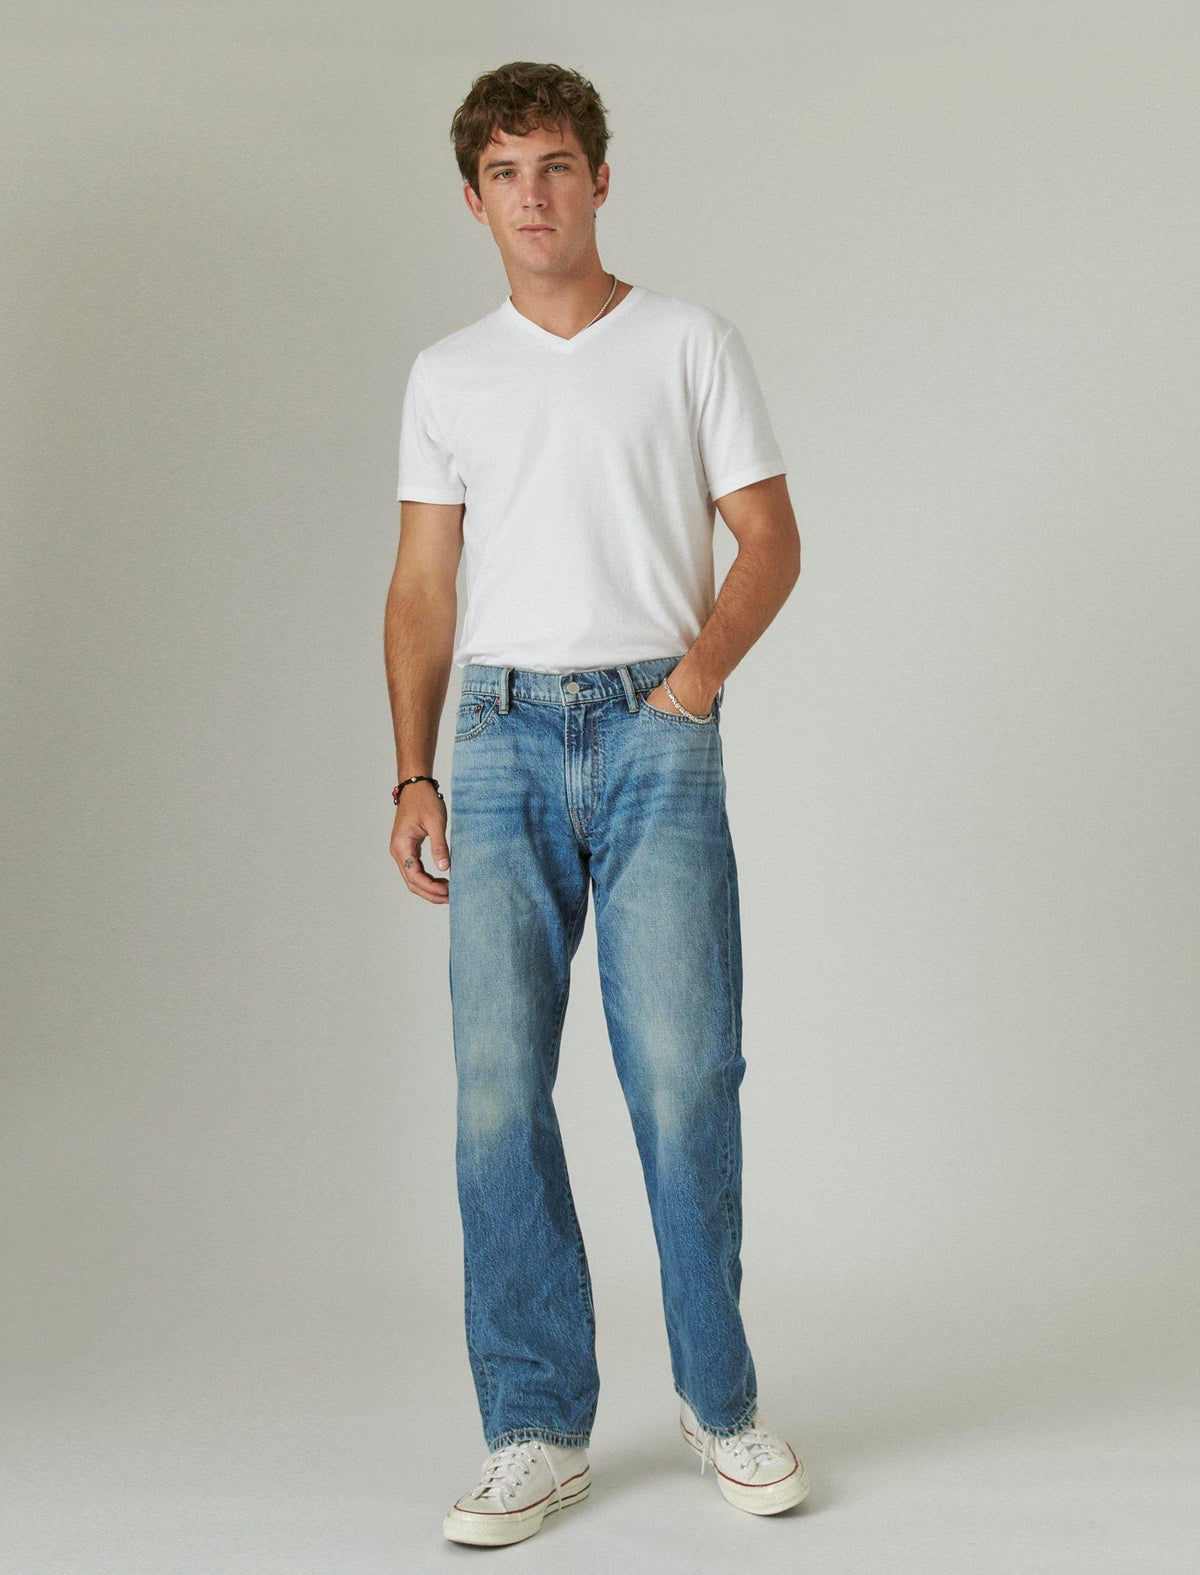 Lucky Brand 363 Vintage Straight Hemp Jean - Men's Pants Denim Straight Leg Jeans Gilman Hemp